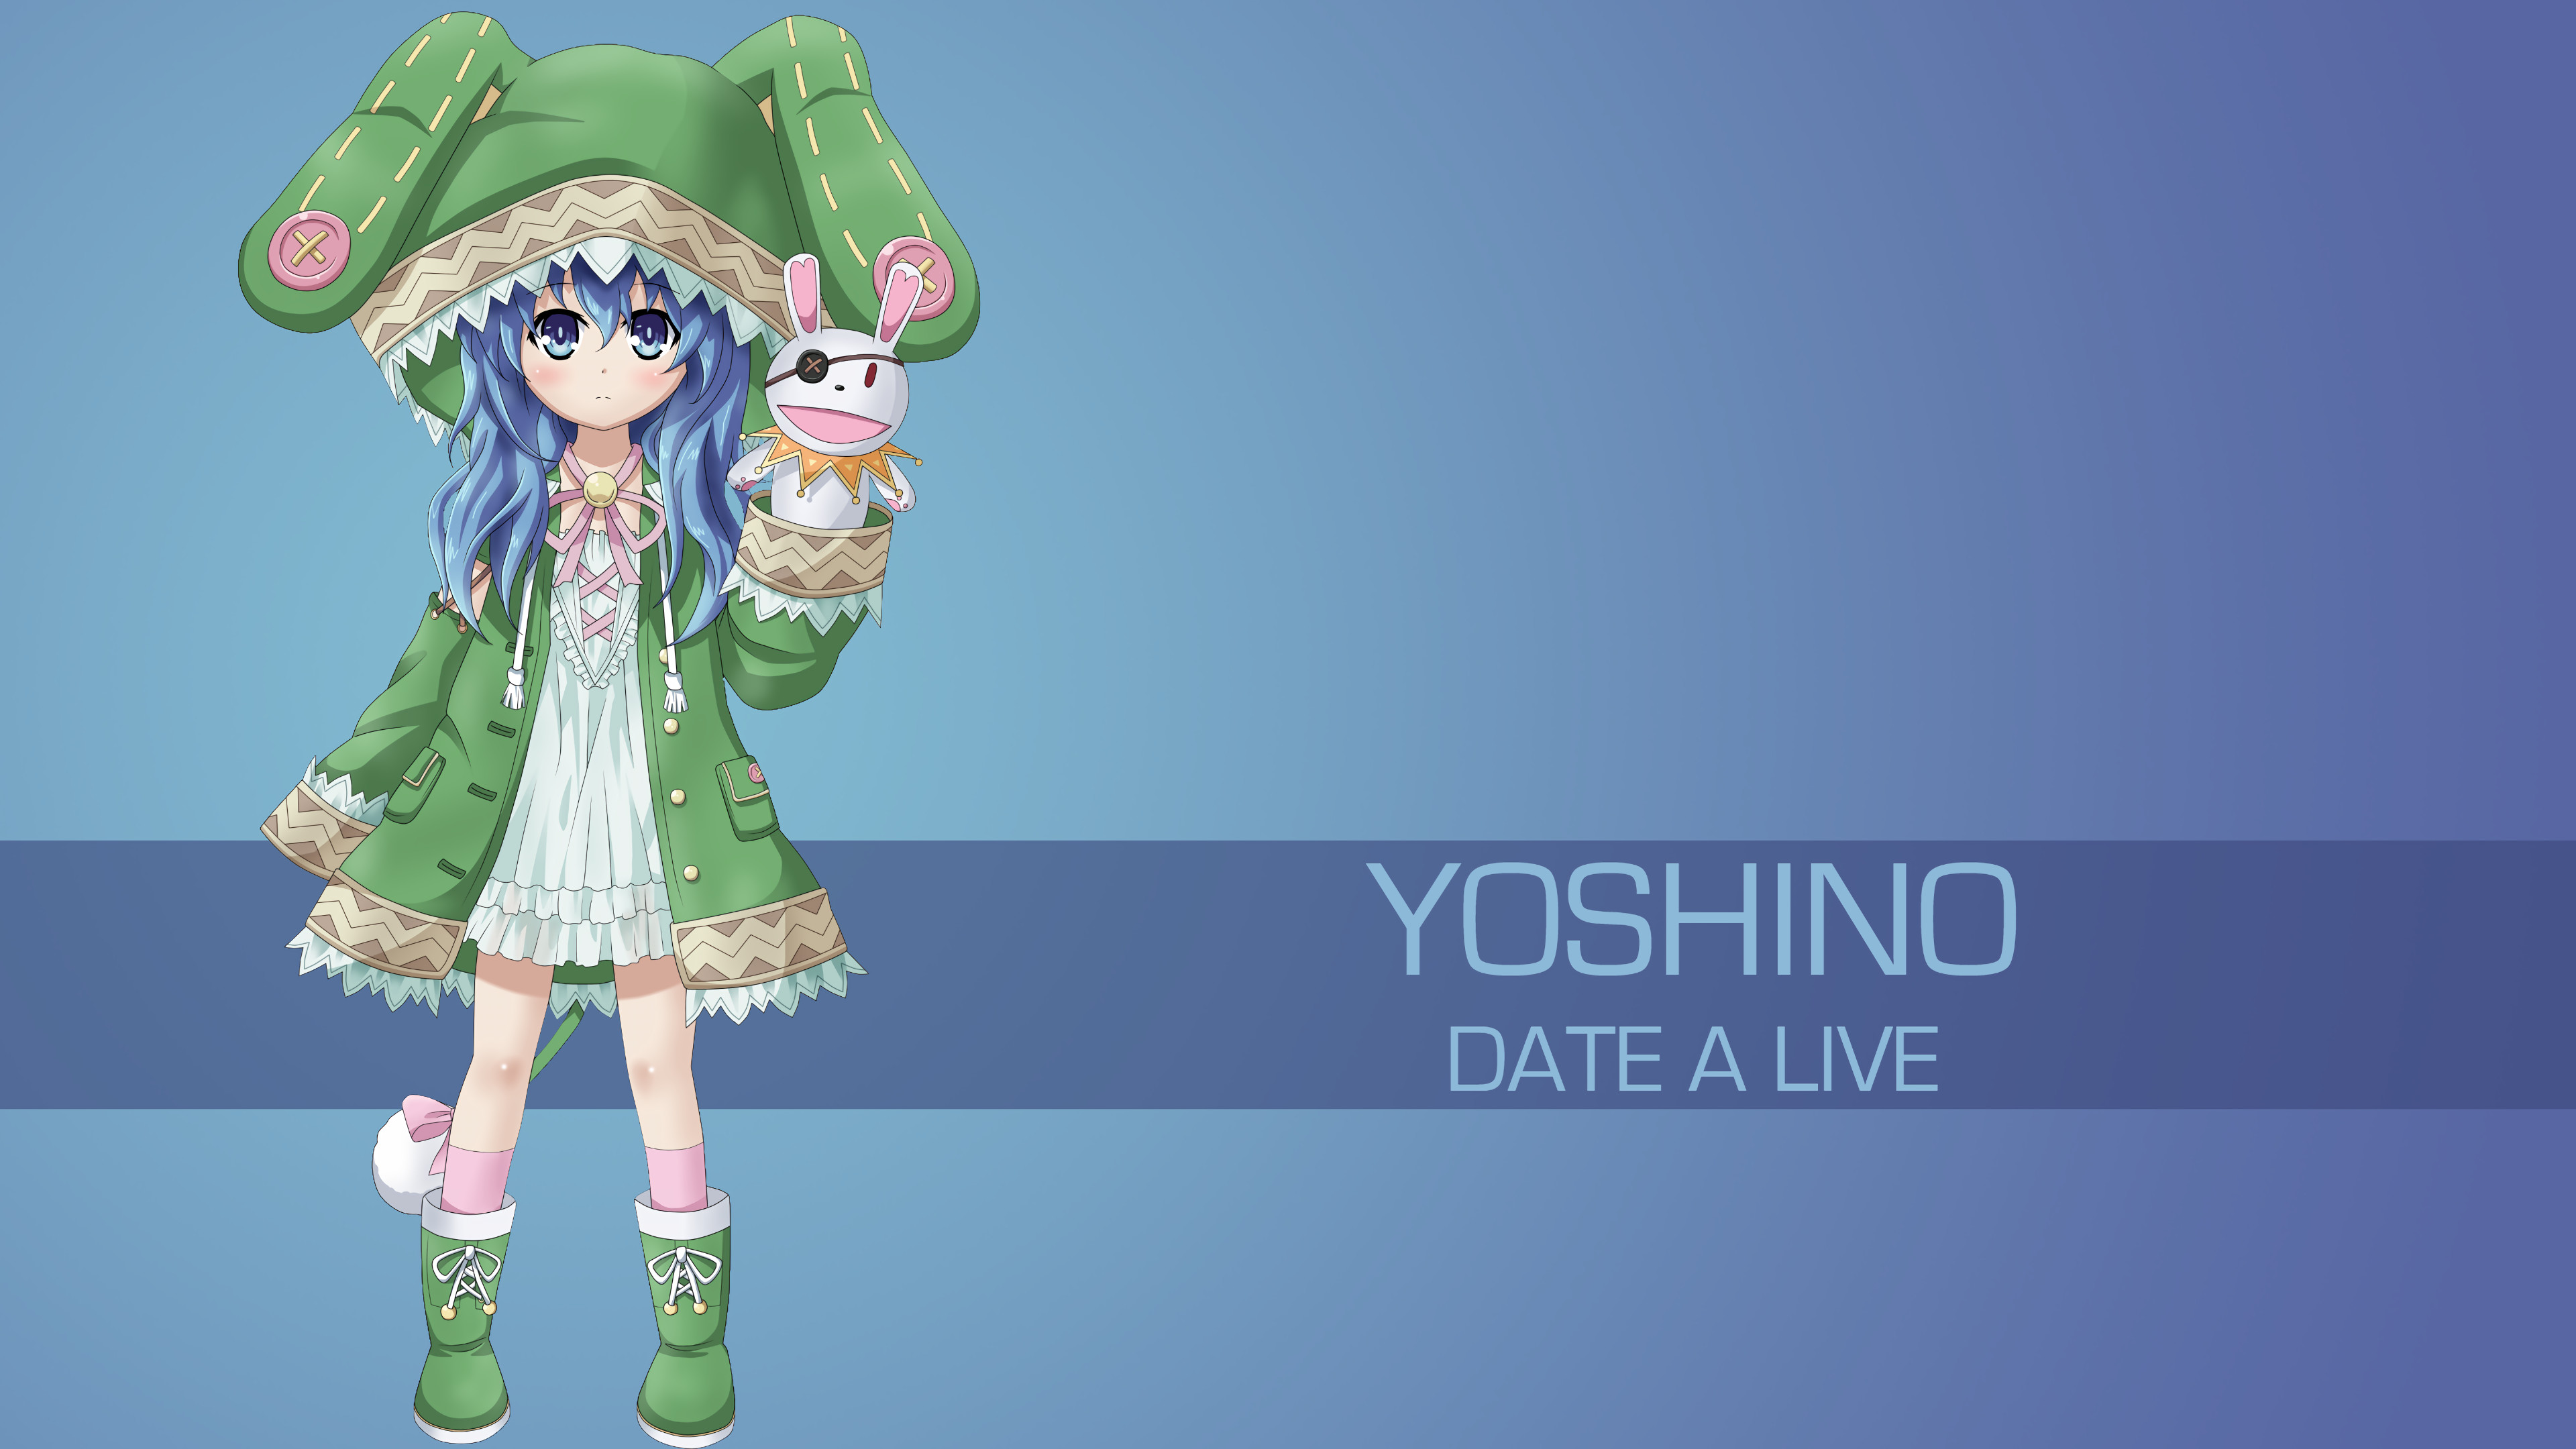 3840x2160 ... Date A Live-Yoshino by spectralfire234